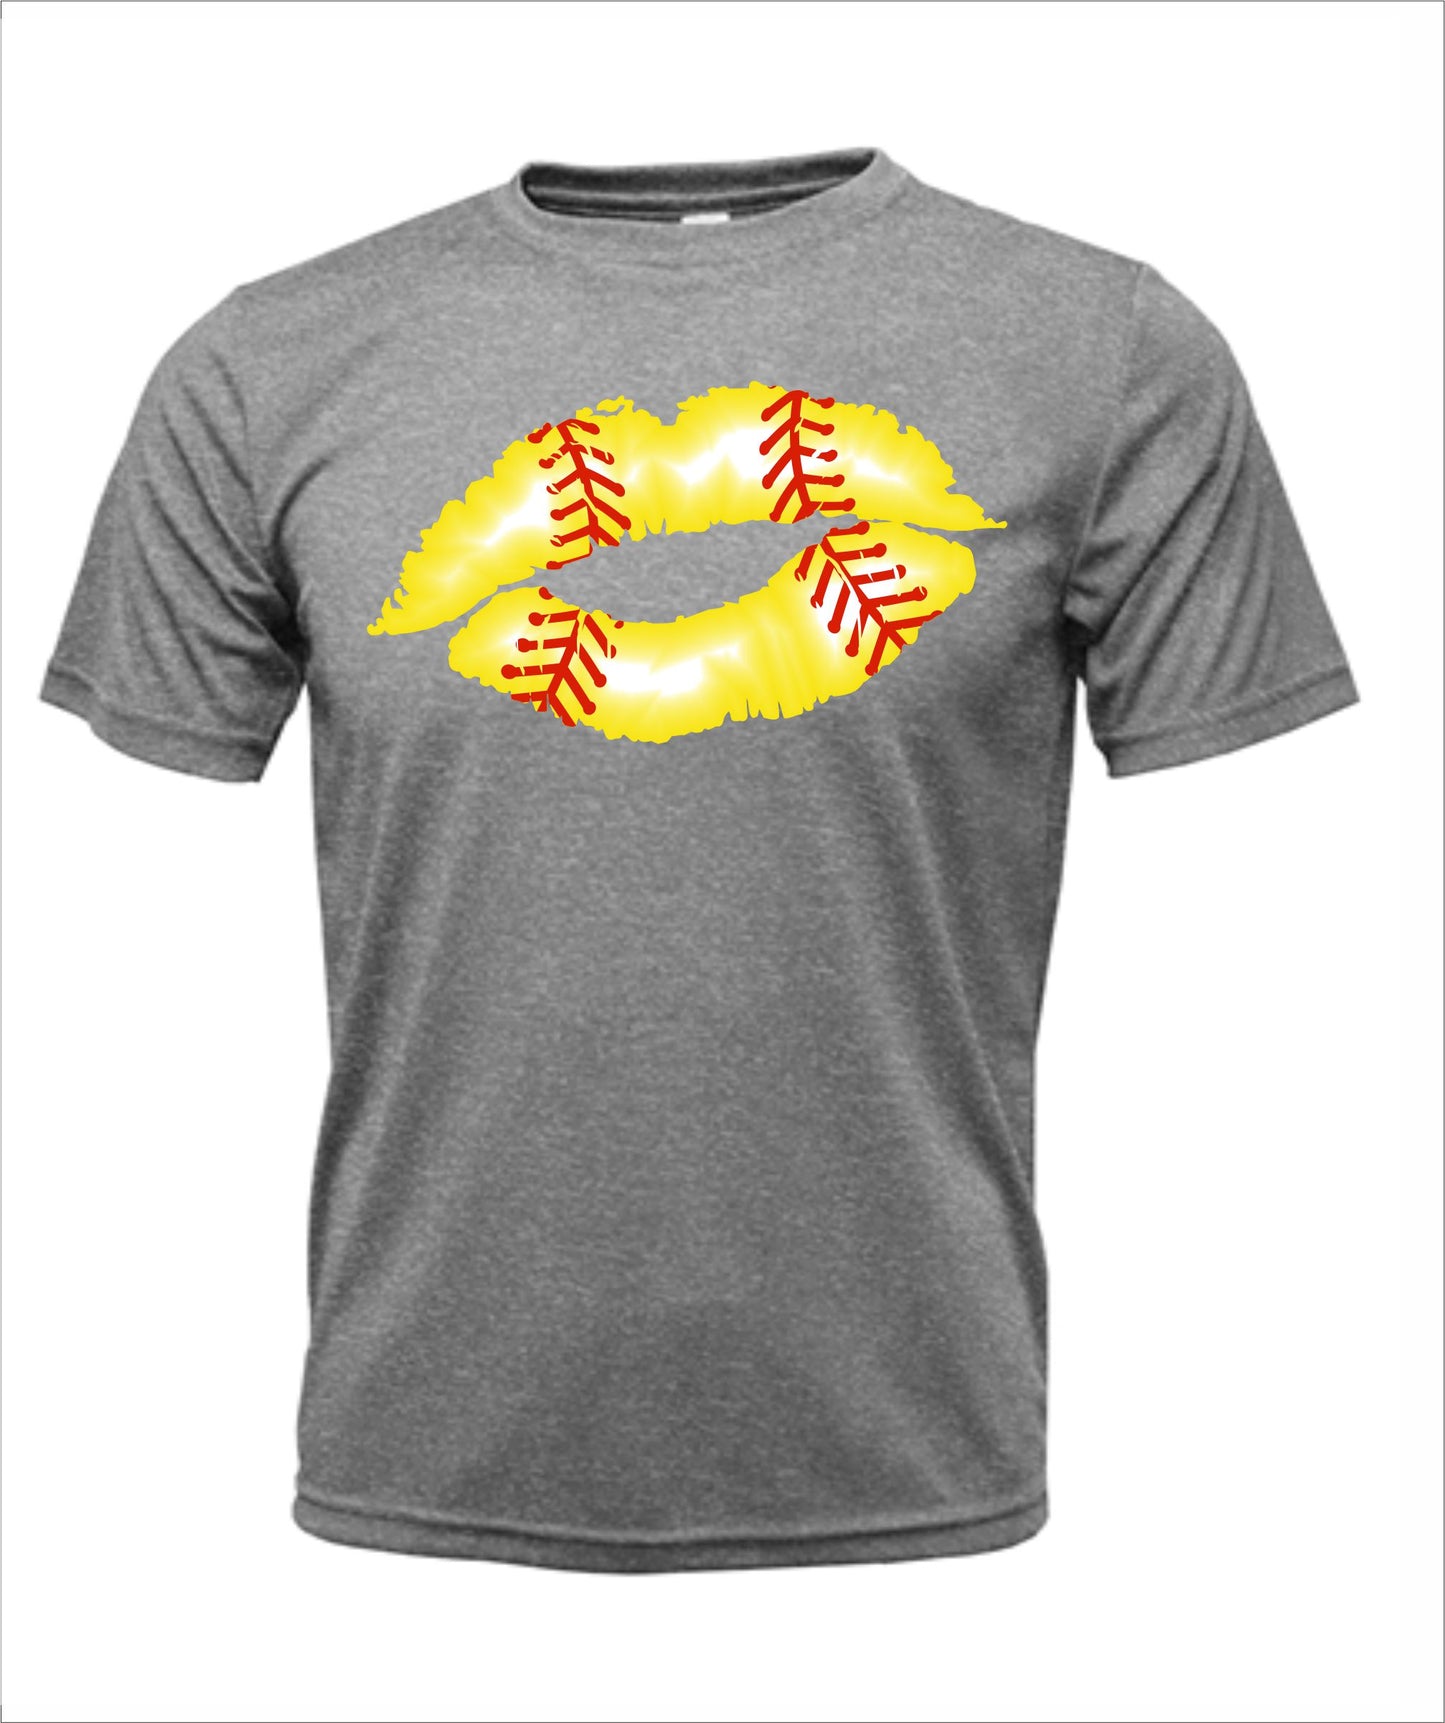 Softball "Kiss" Cotton T-Shirt